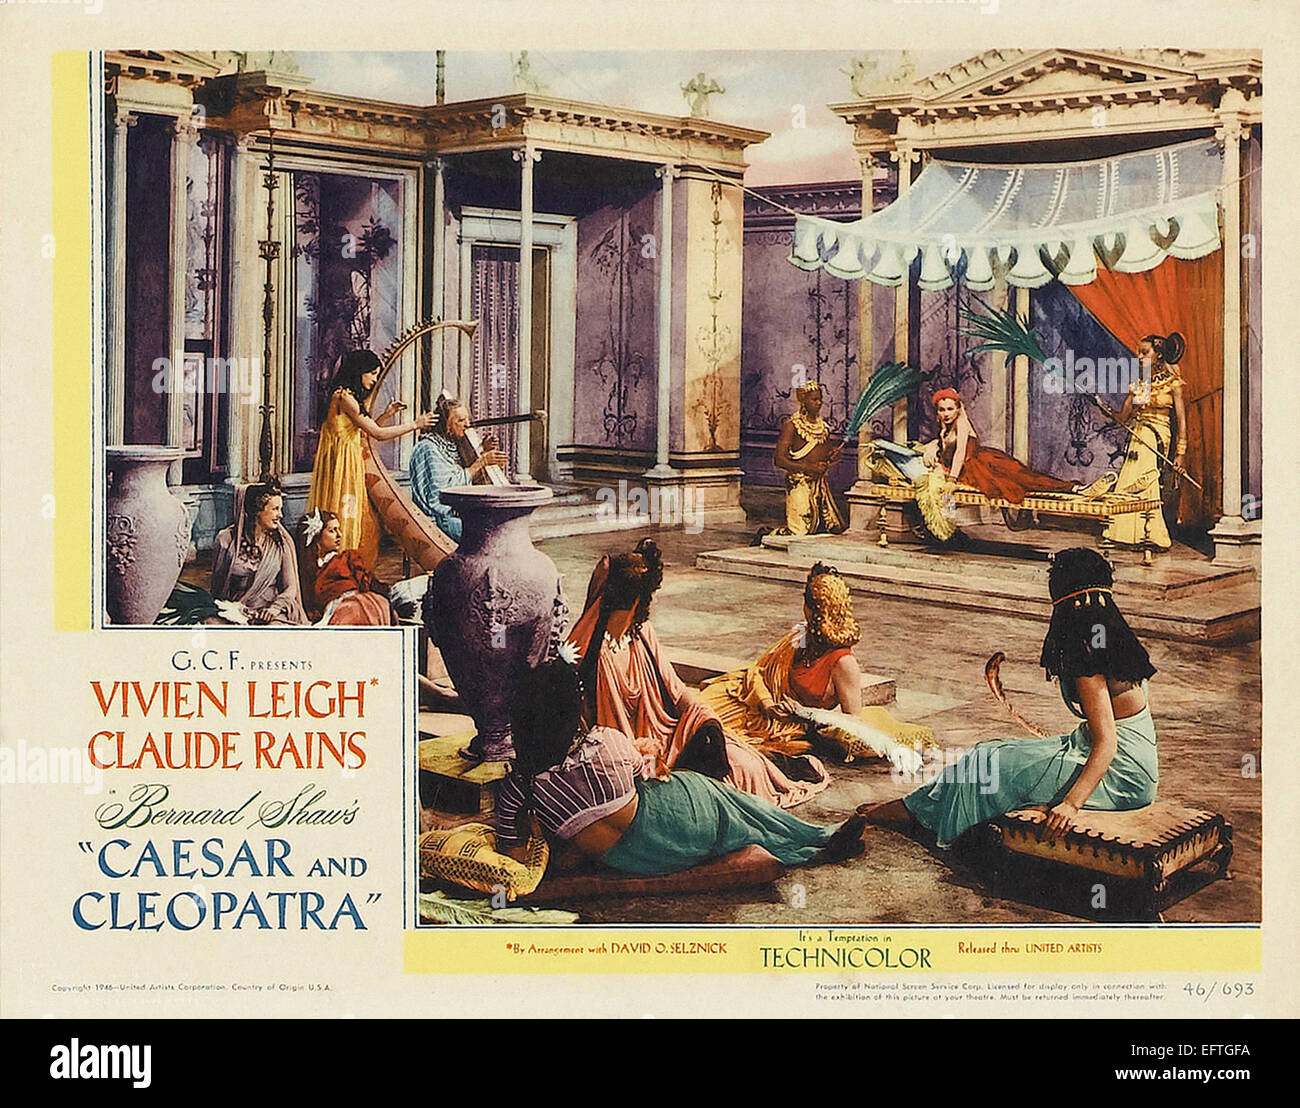 César y Cleopatra - Lluvias caude - Vivien Leigh - póster de película Foto de stock